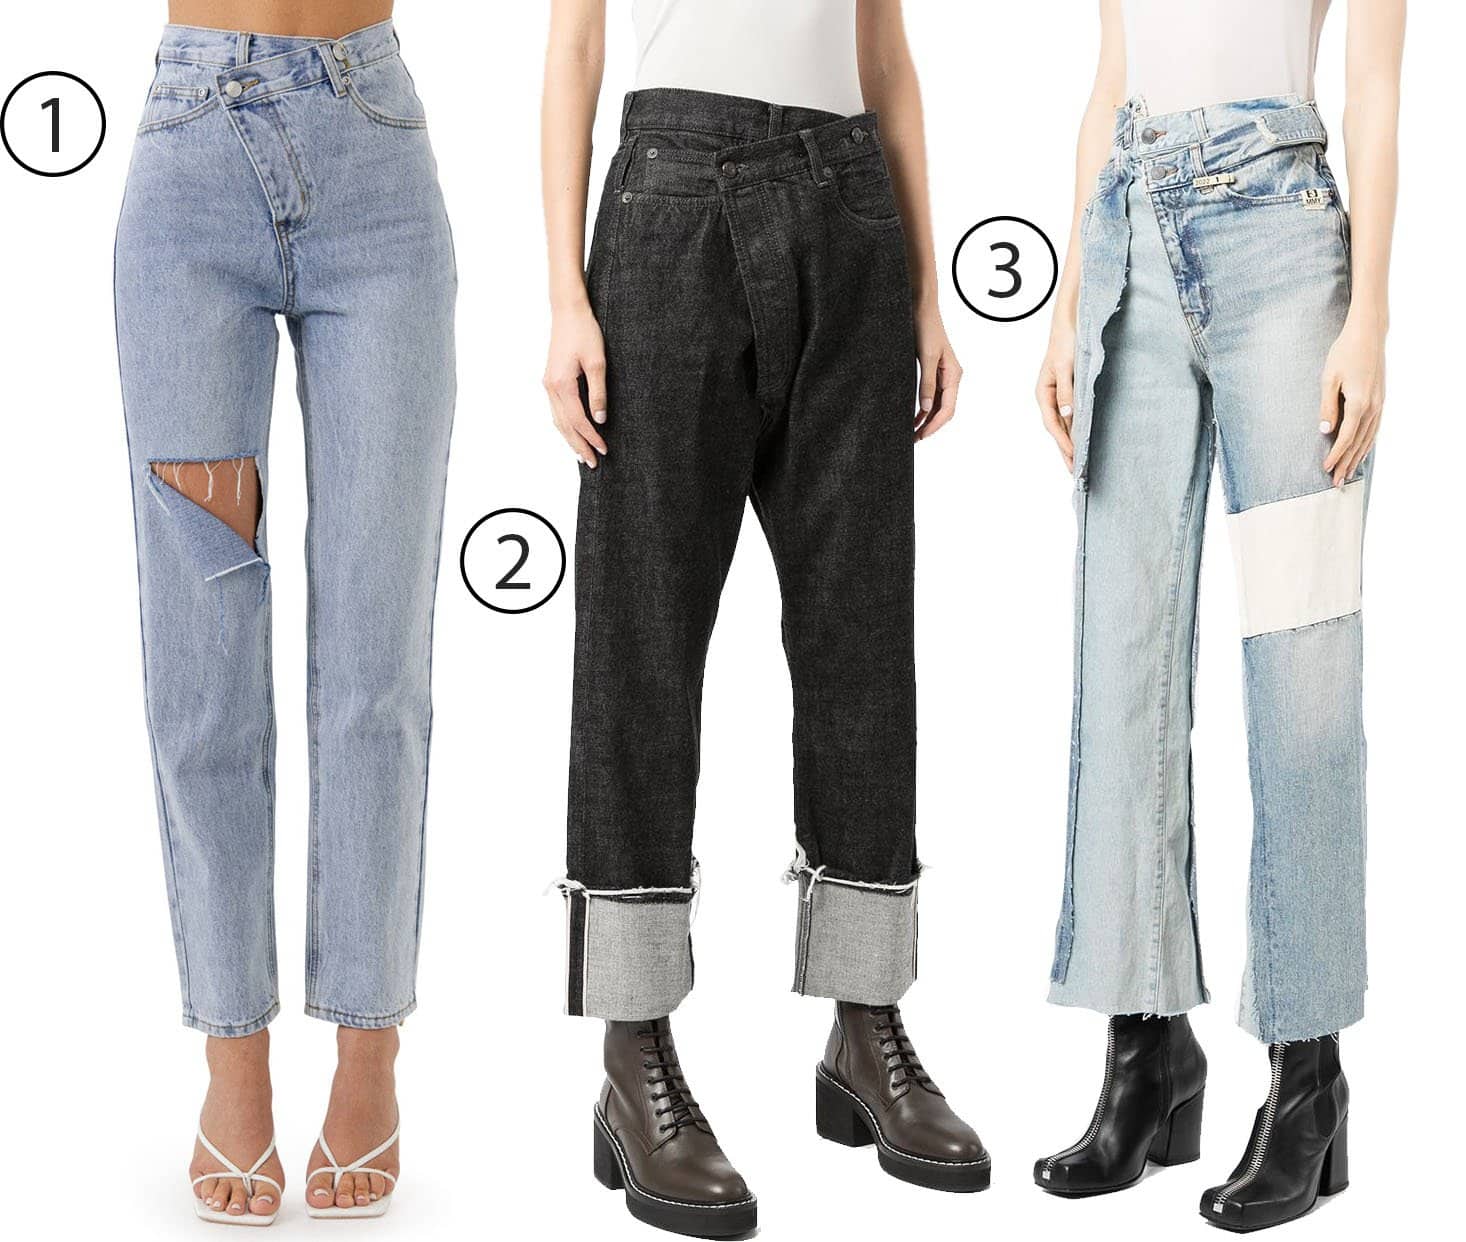 1. Grey Lab Asymmetric Wrap Jeans 2. R13 Asymmetric Cropped Jeans 3. Maison Mihara Yasuhiro Asymmetric Patchwork-design Jeans